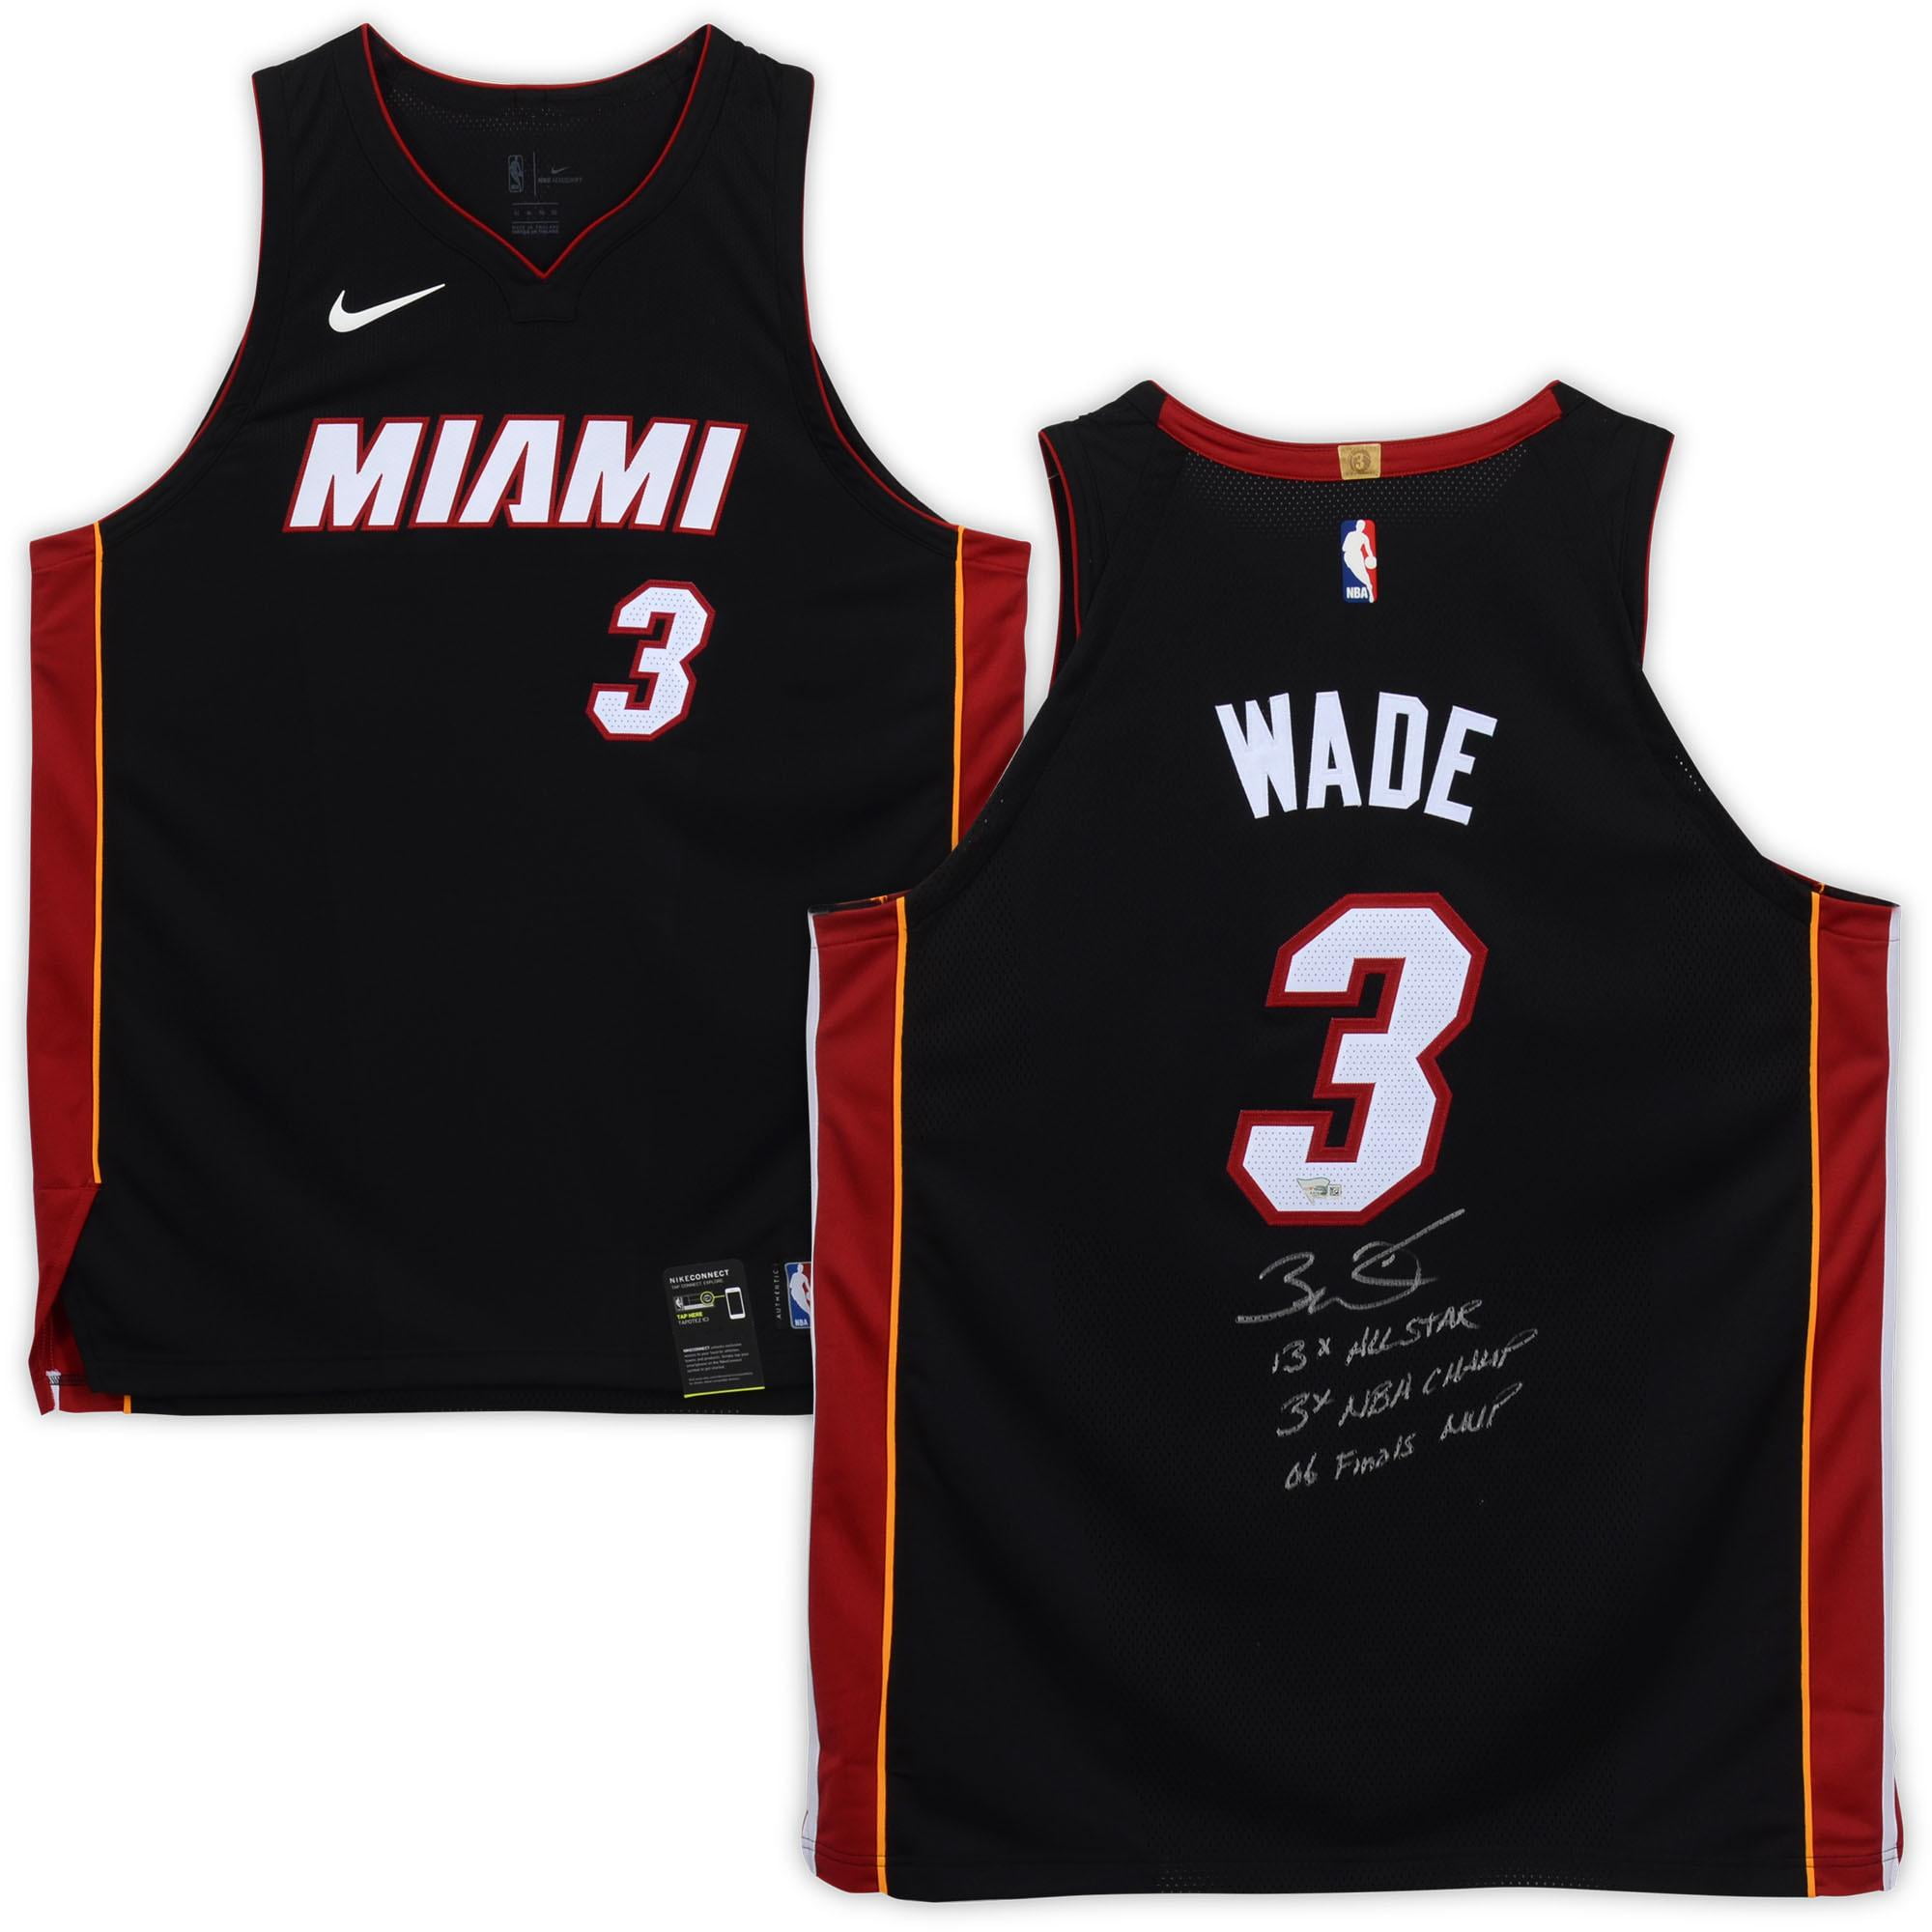 dwyane wade limited edition jersey